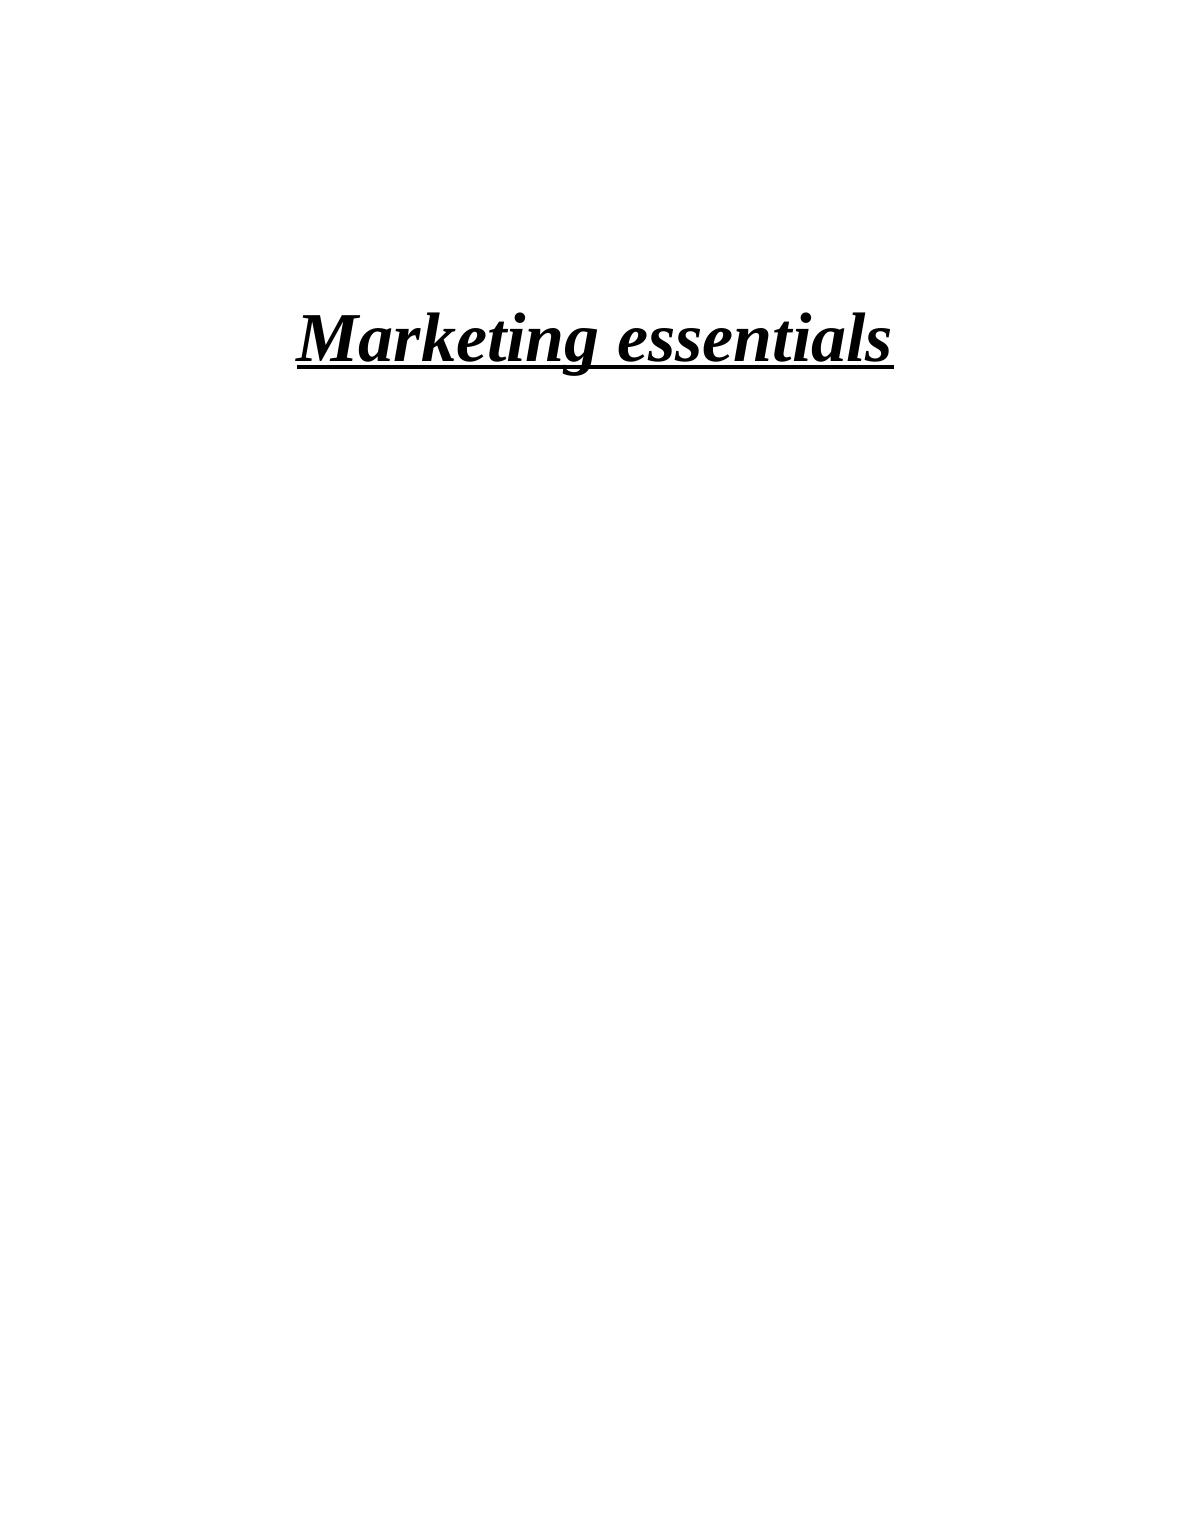 Essentials of Marketing for Business Organization_1